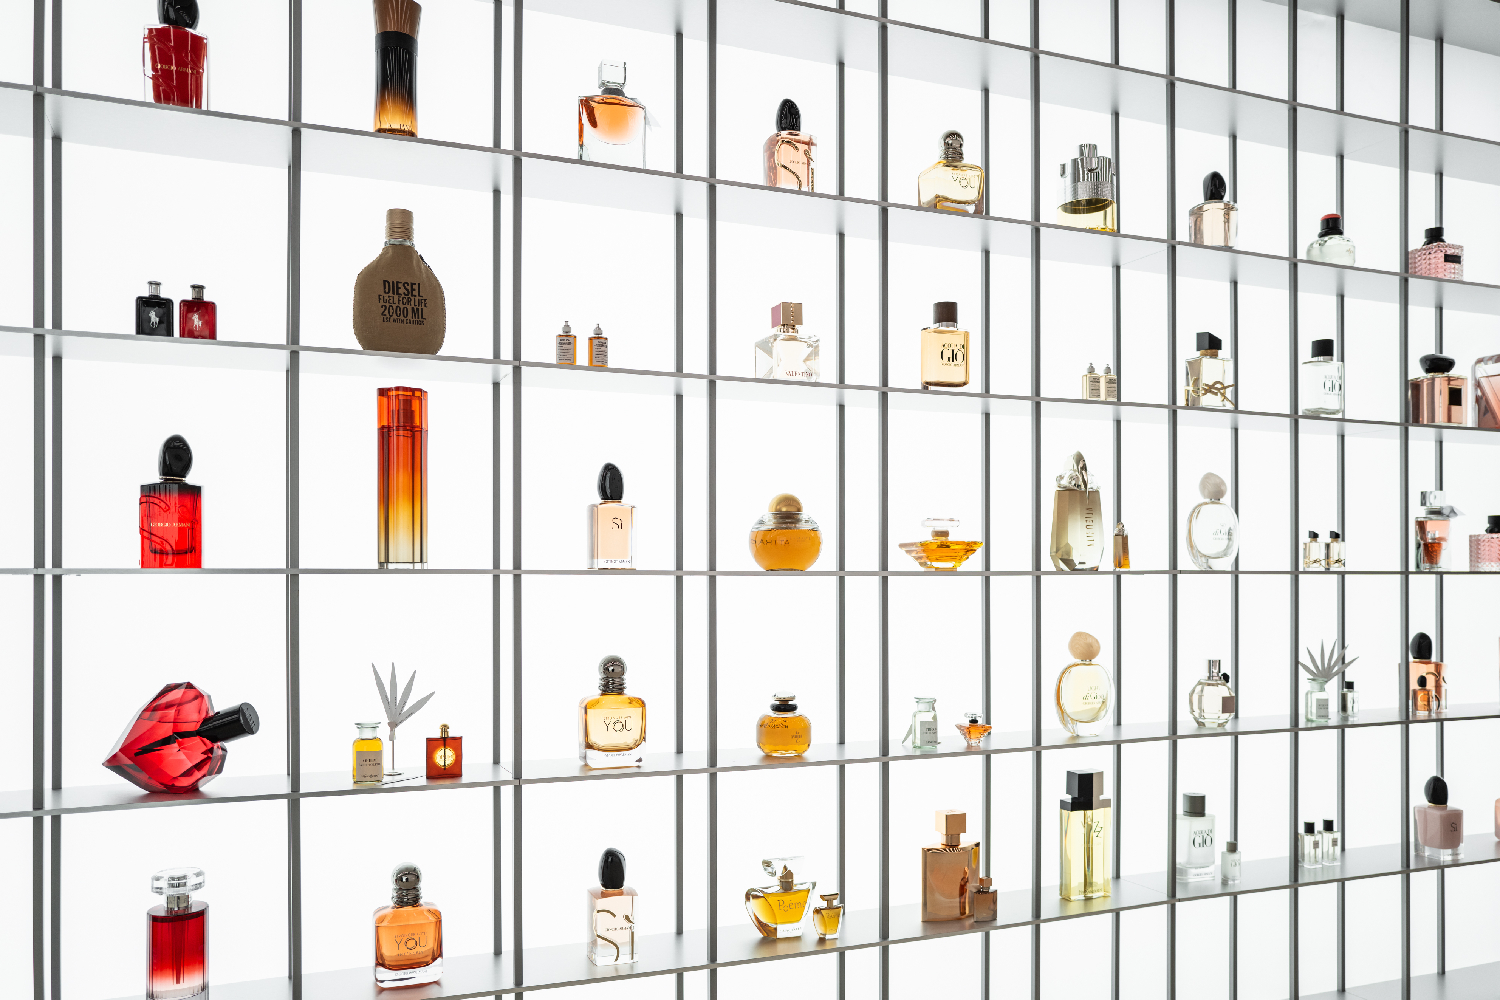 L'Oréal Art & Science of Fragrance